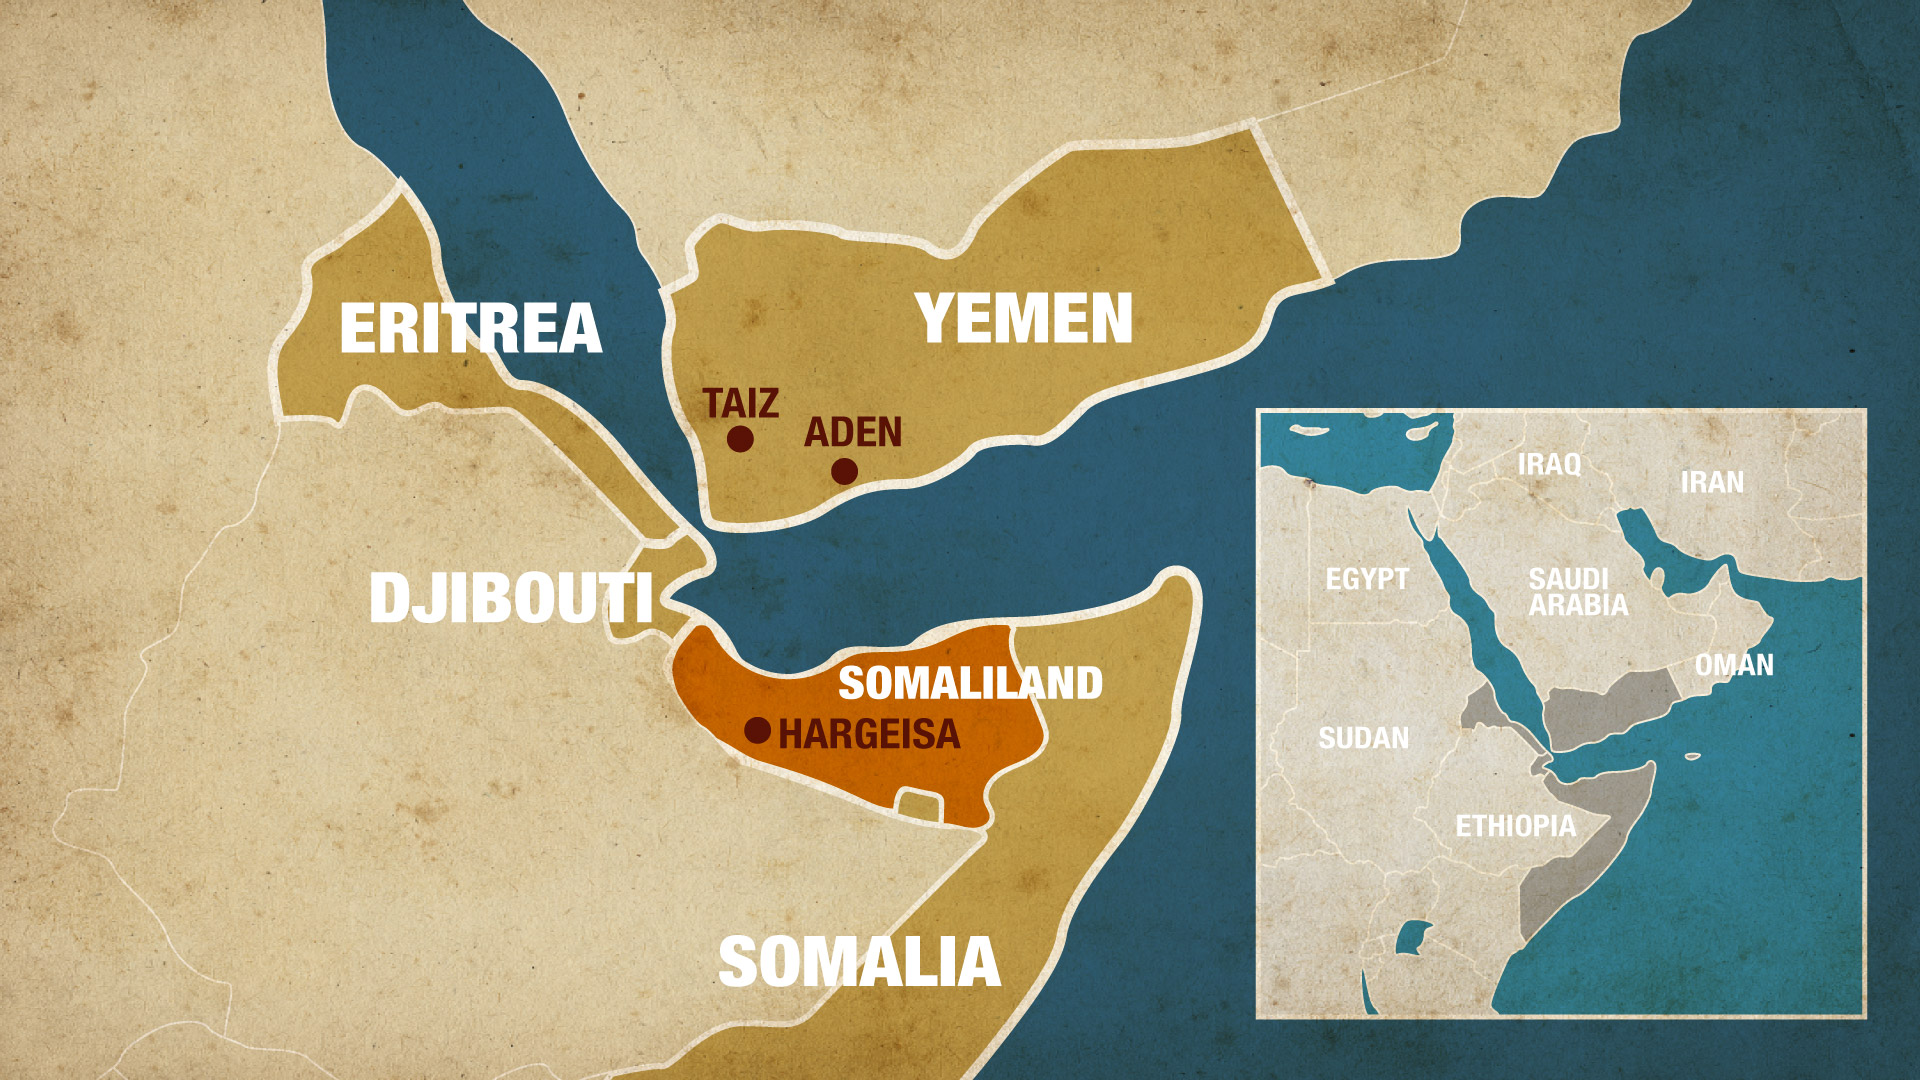 MAP-Yemen-Somalia-Eritrea-Djibouti.jpg